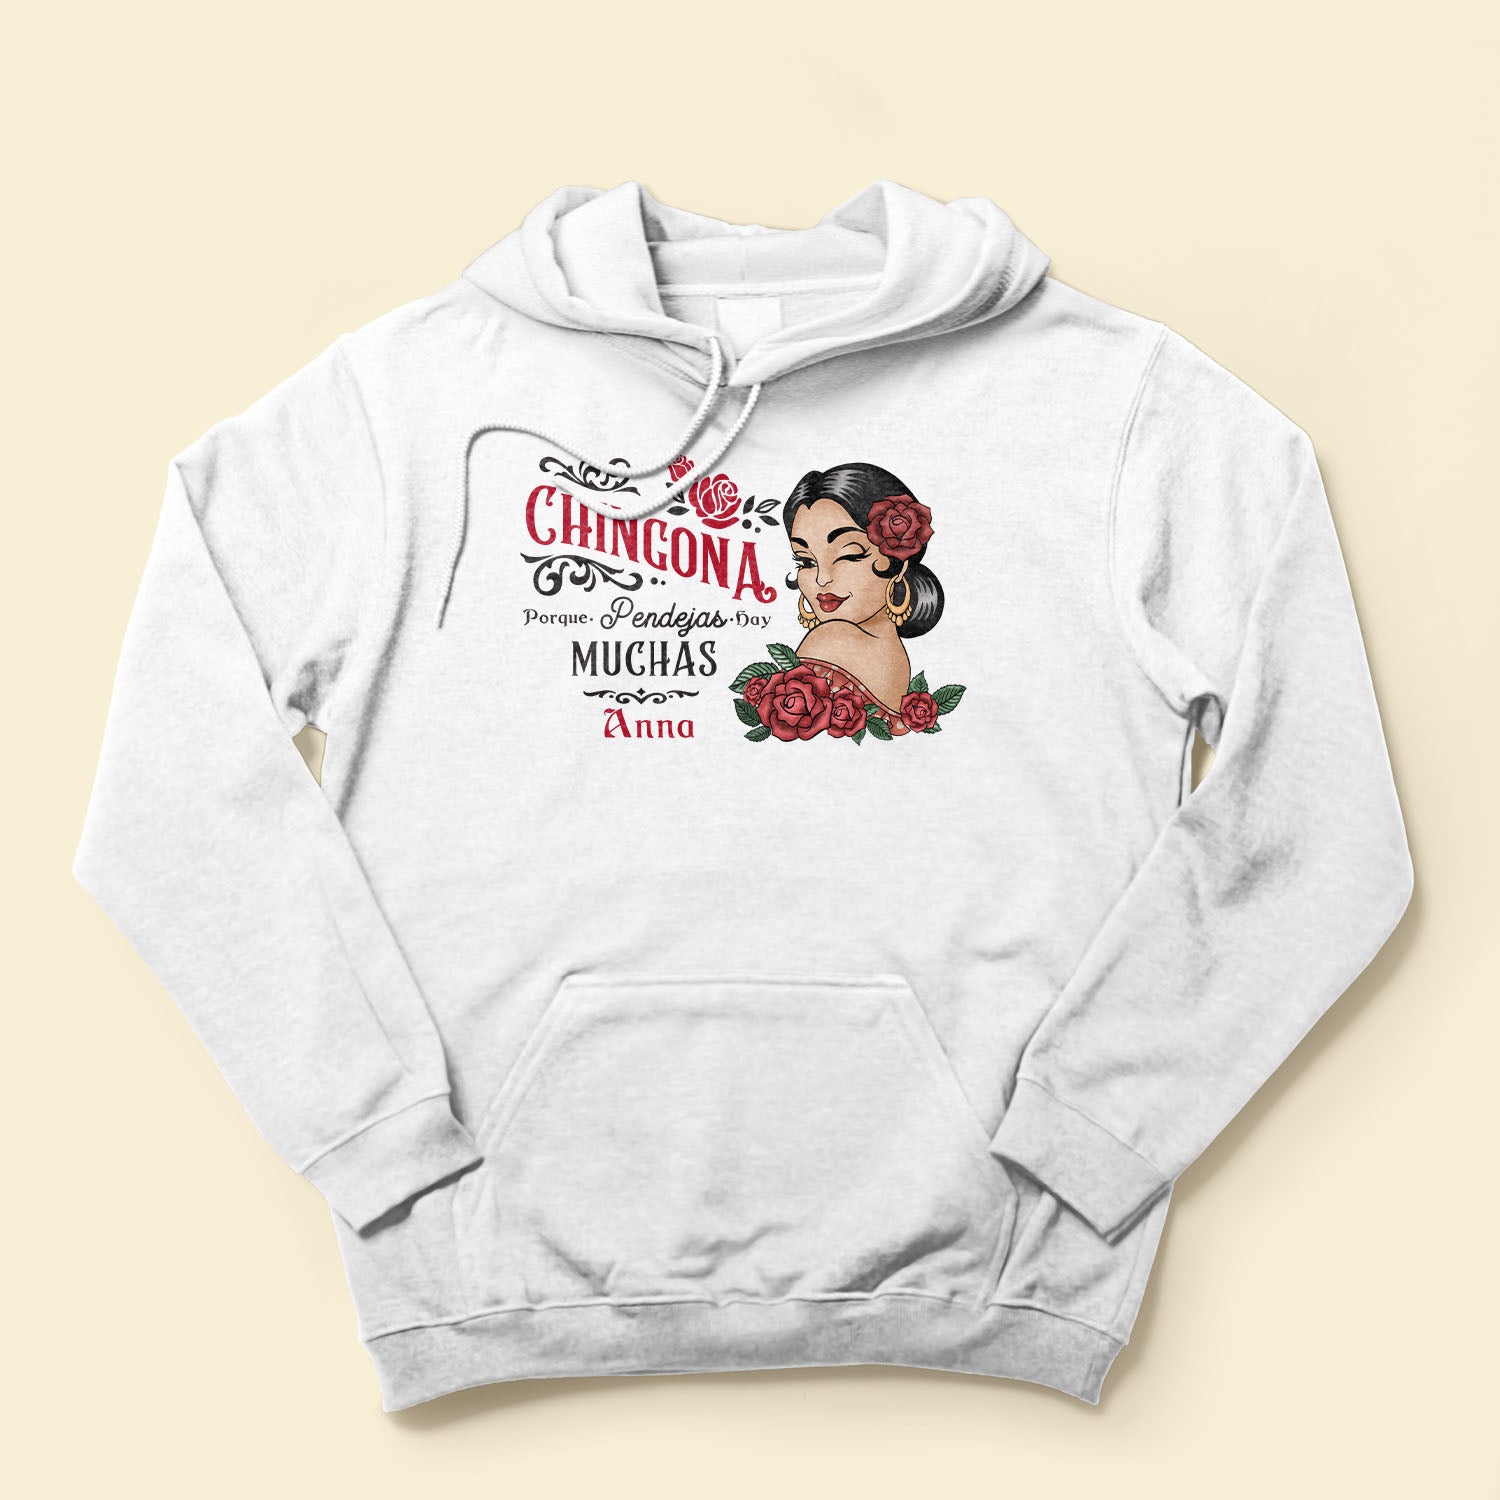 Chingona Porque Pendejas Hay Muchas - Personalized Shirt - Hispanic Heritage Month Gift For Hispanics